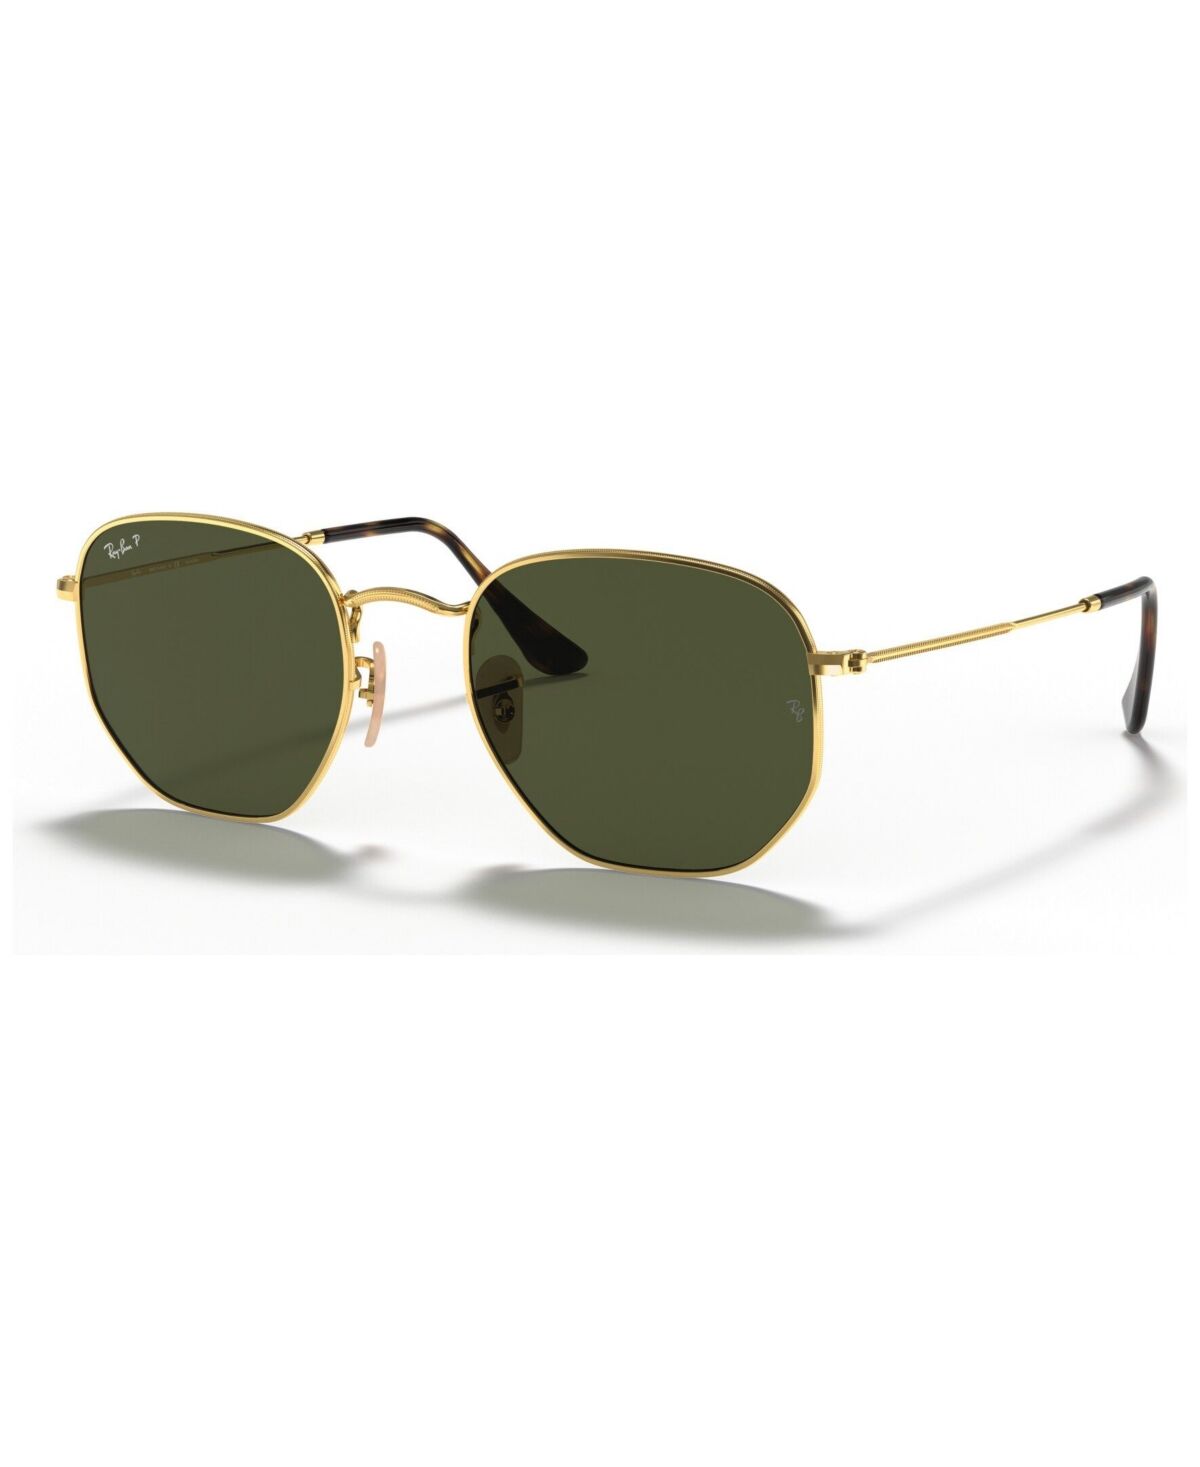 Ray-Ban Unisex Polarized Sunglasses, RB3548N Hexagonal Washed Evolve - Gold/Green Polar